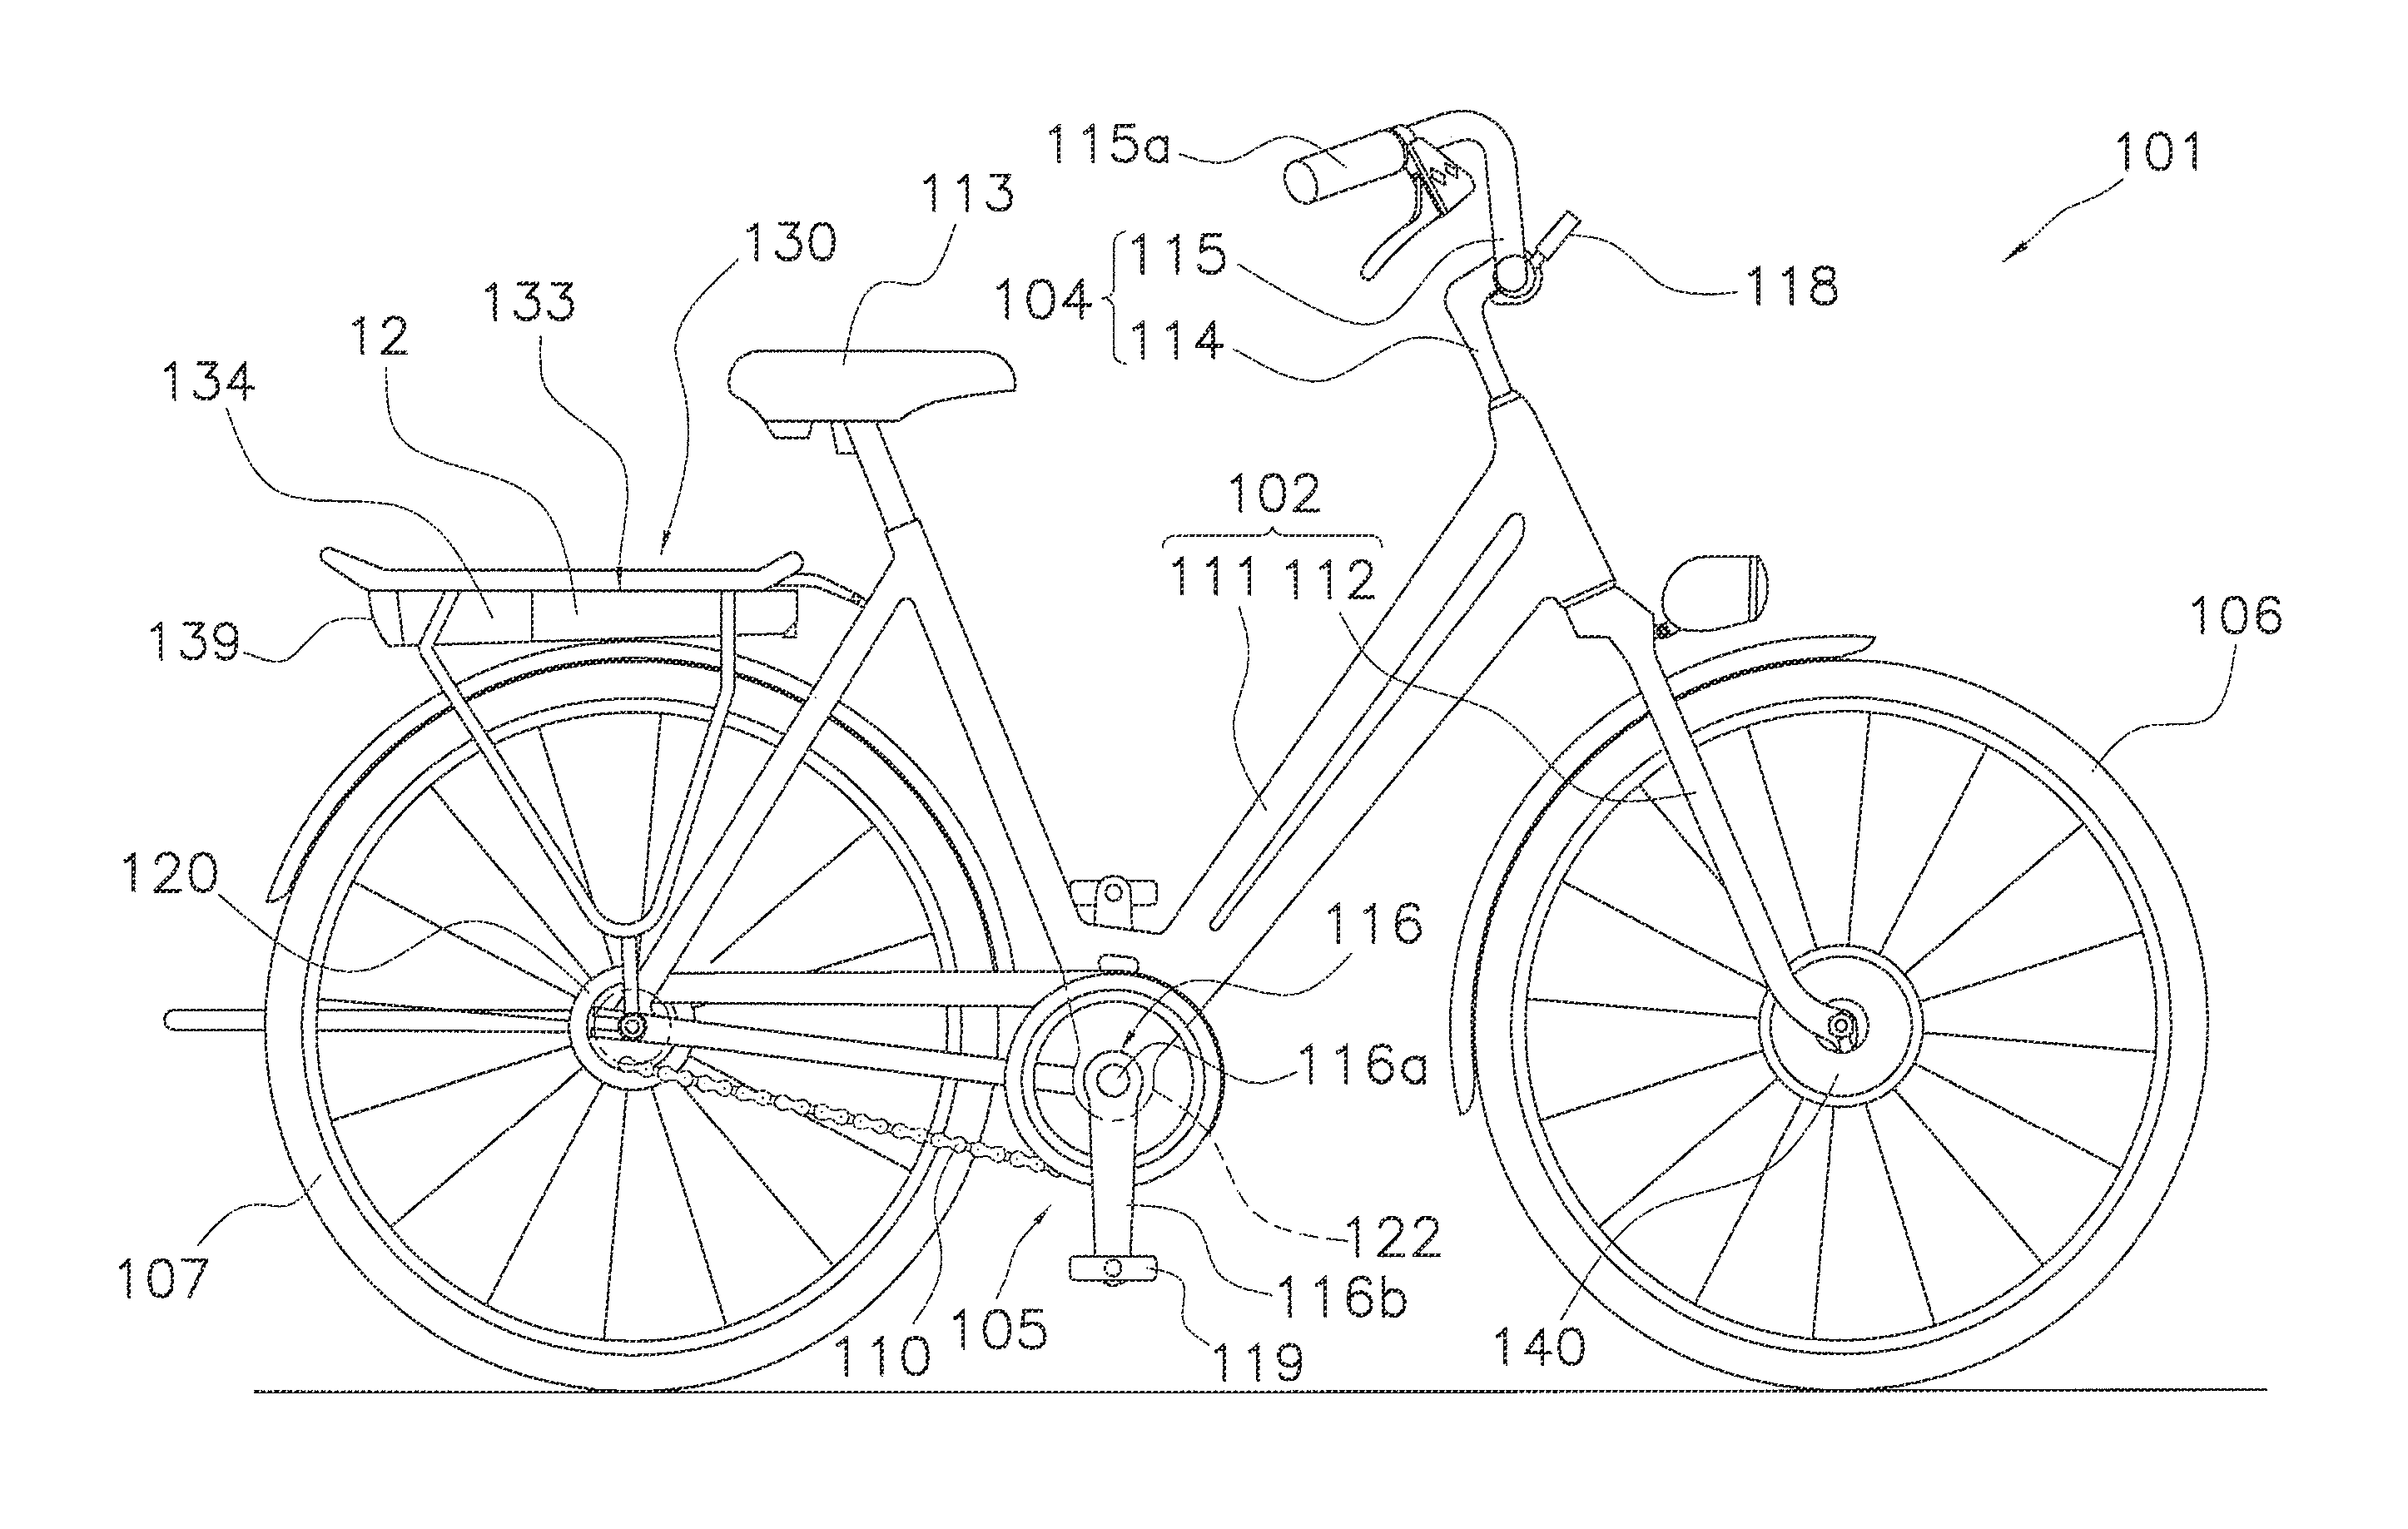 Bicycle control apparatus